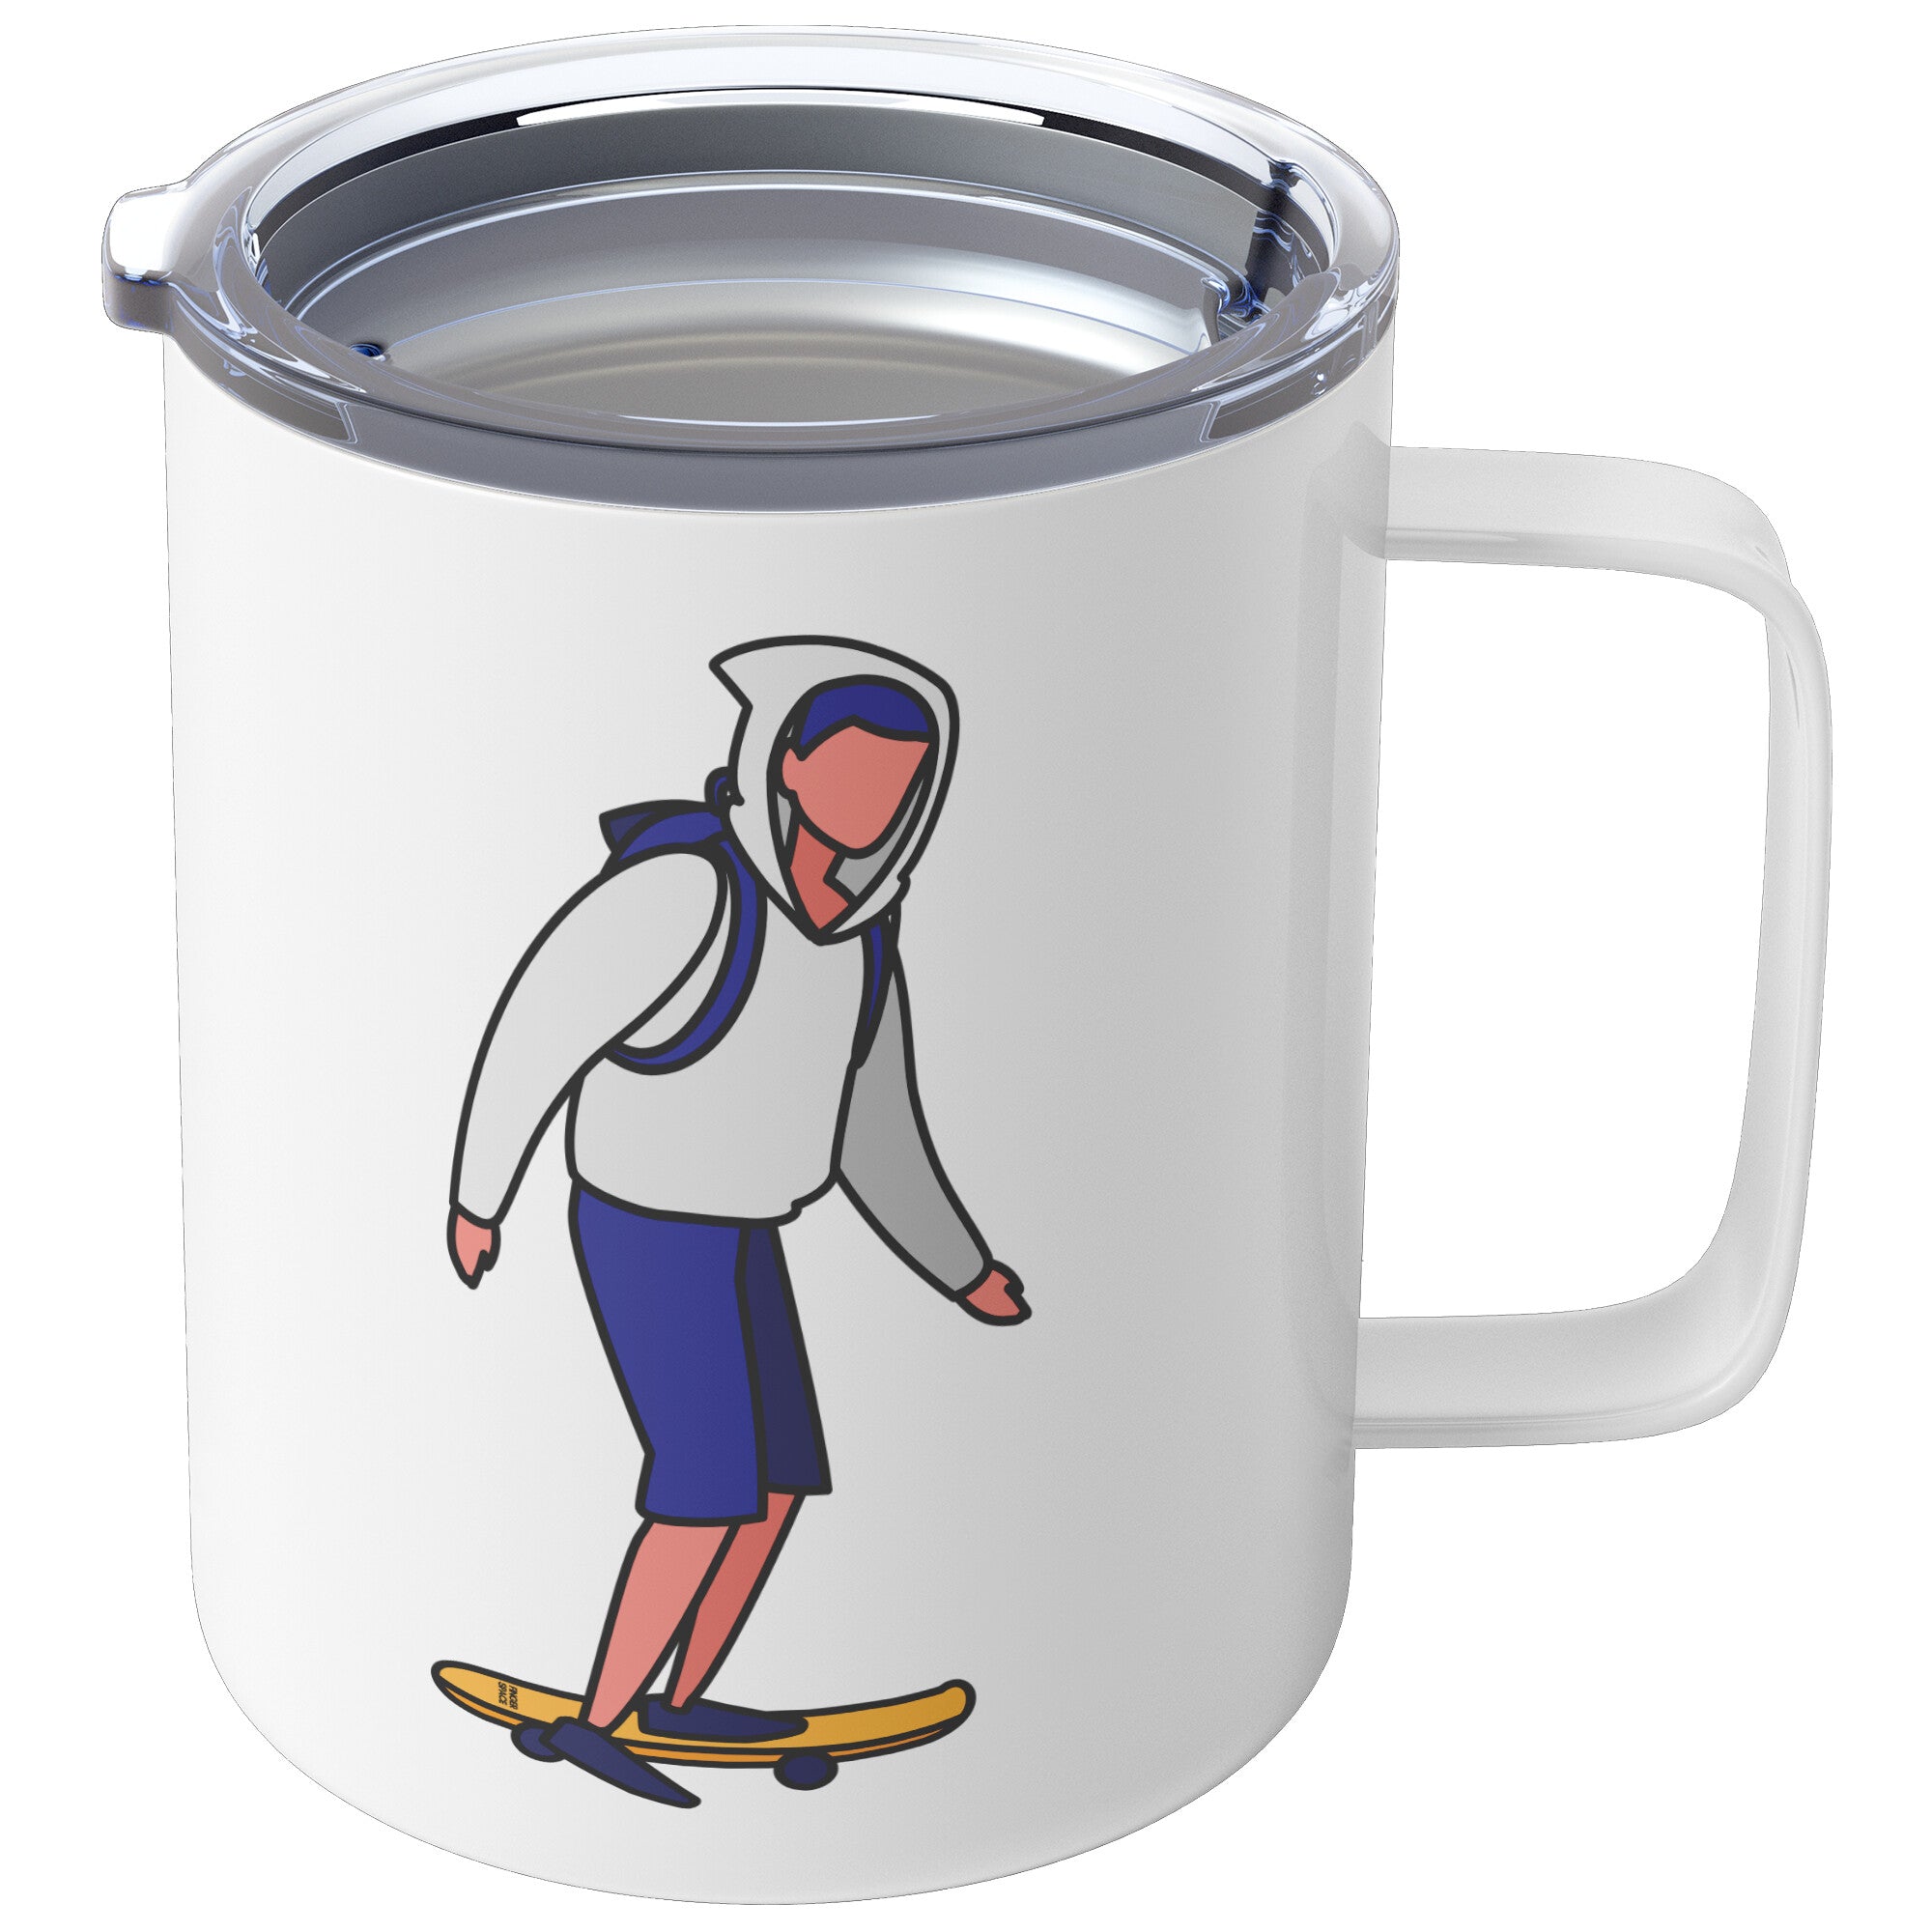 Skater Boy Premium Insulated Mug by Finger Space